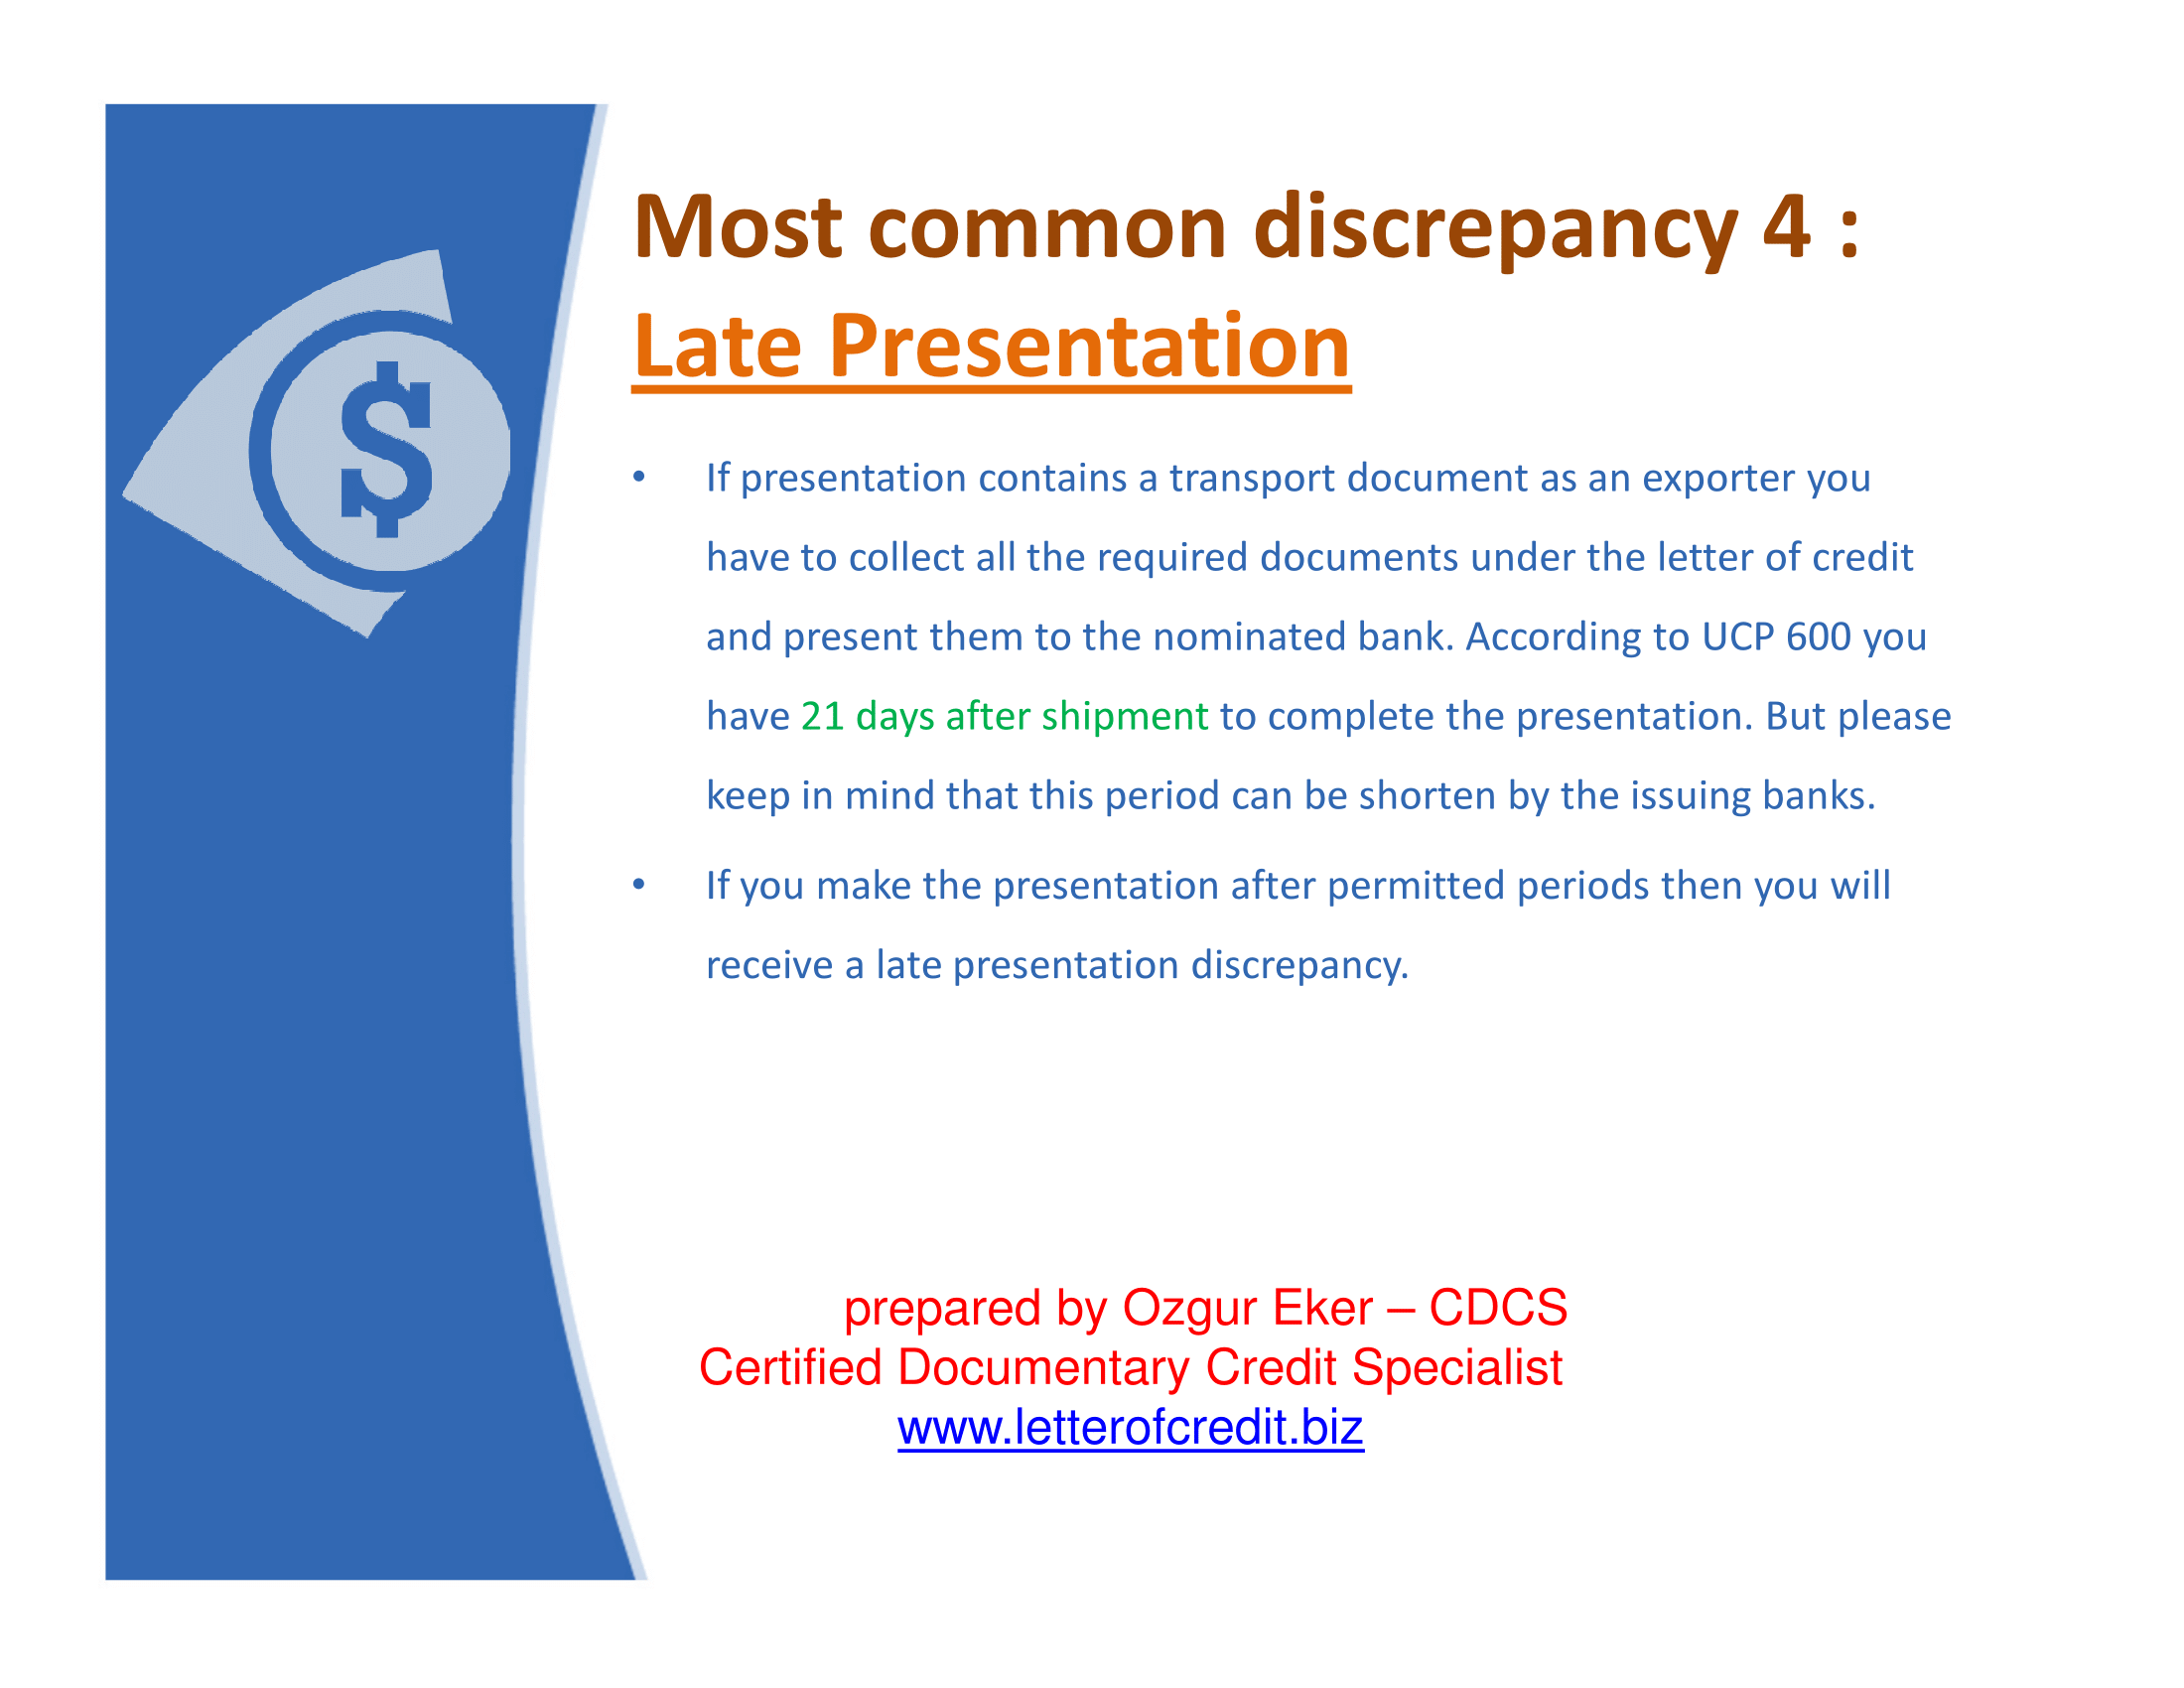 late presentation